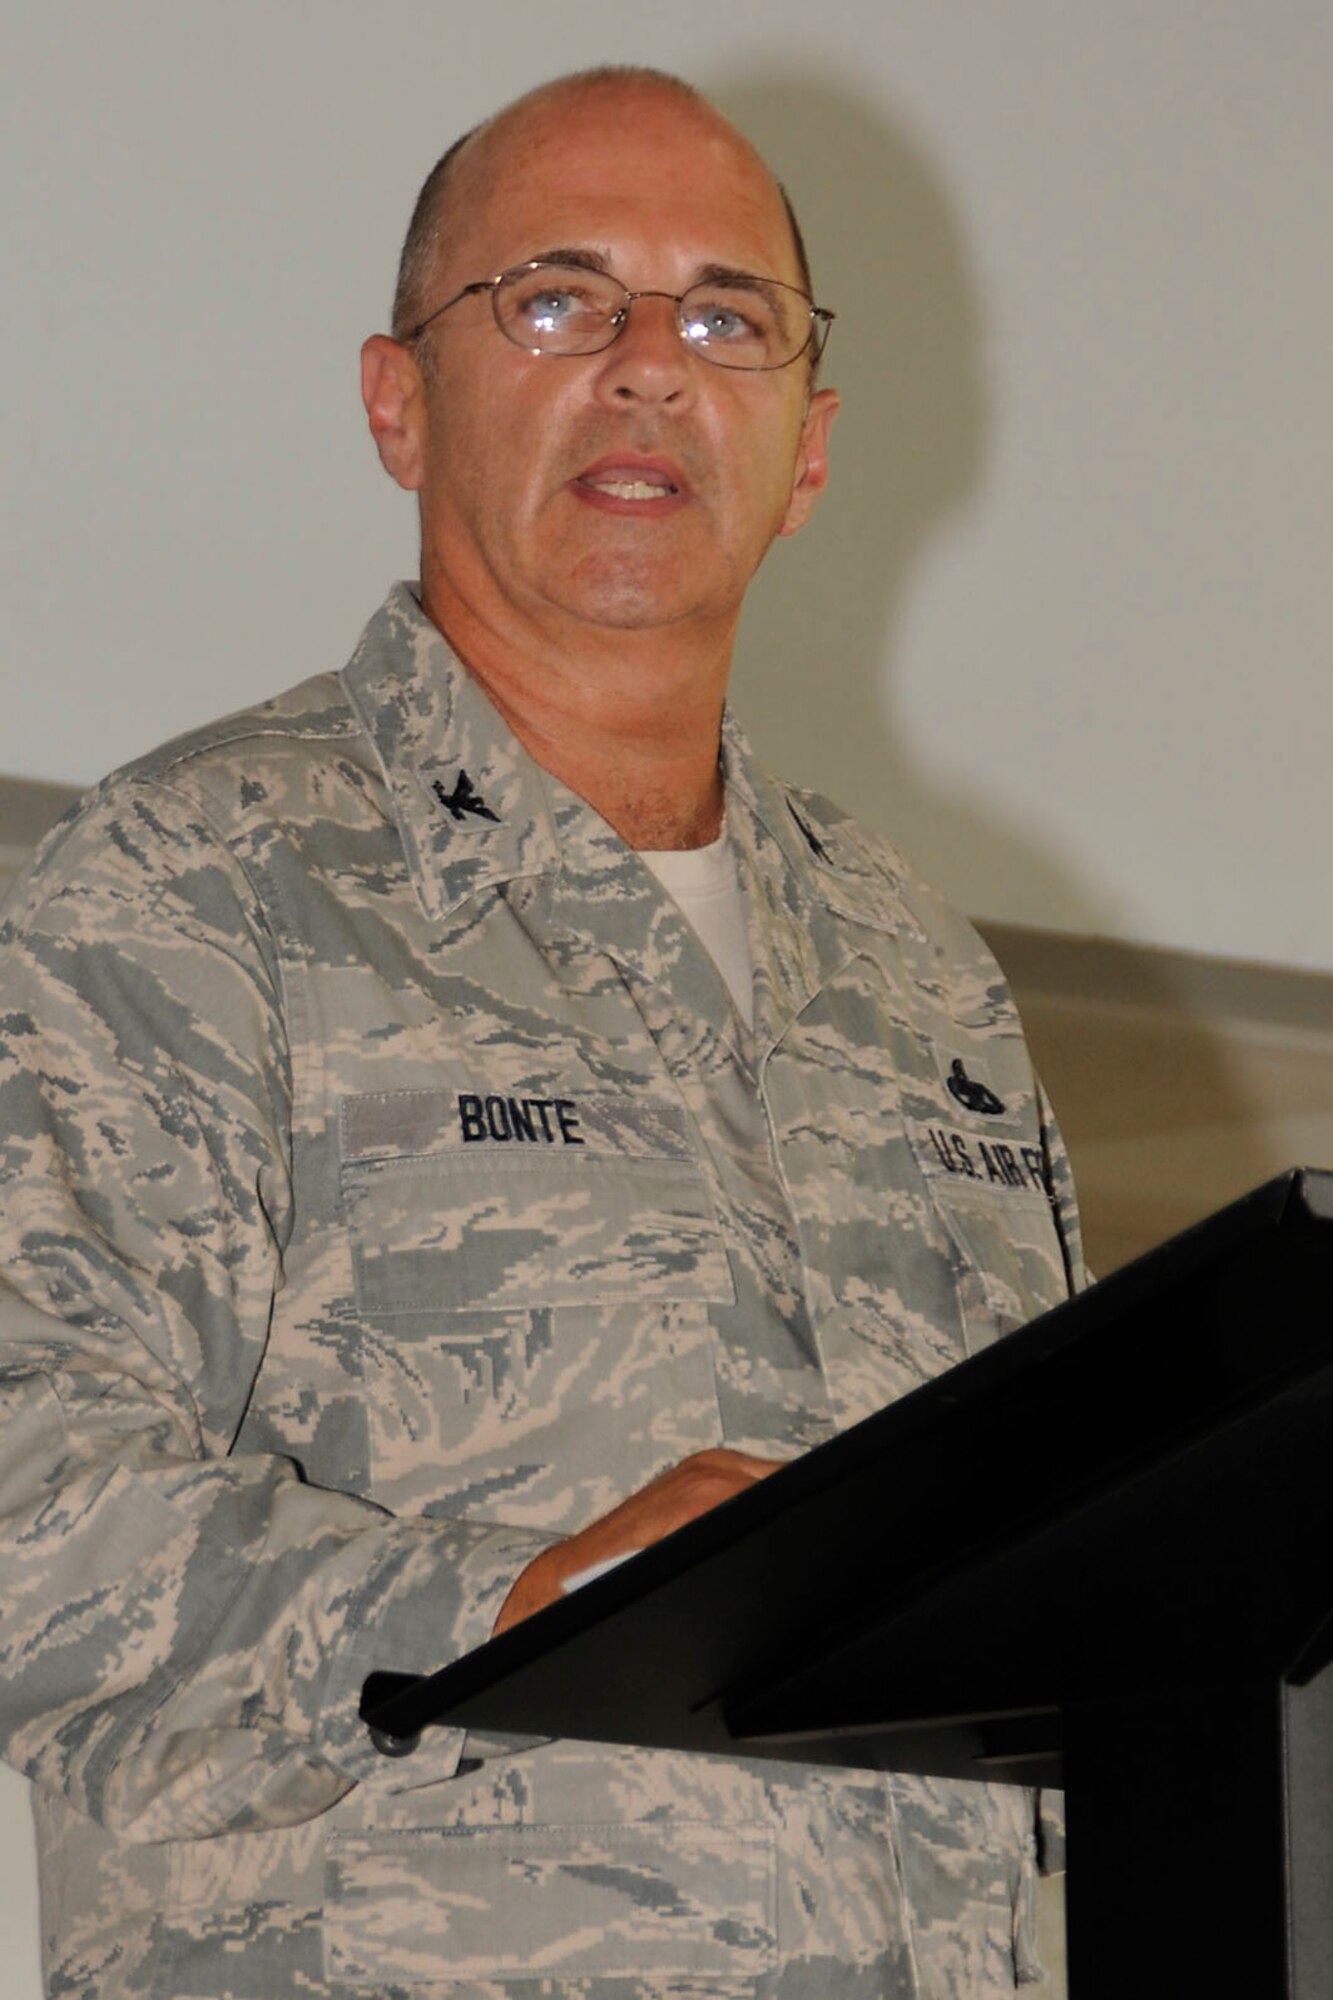 Col. Donald J. Bonte, Jr., Commander, 181IW